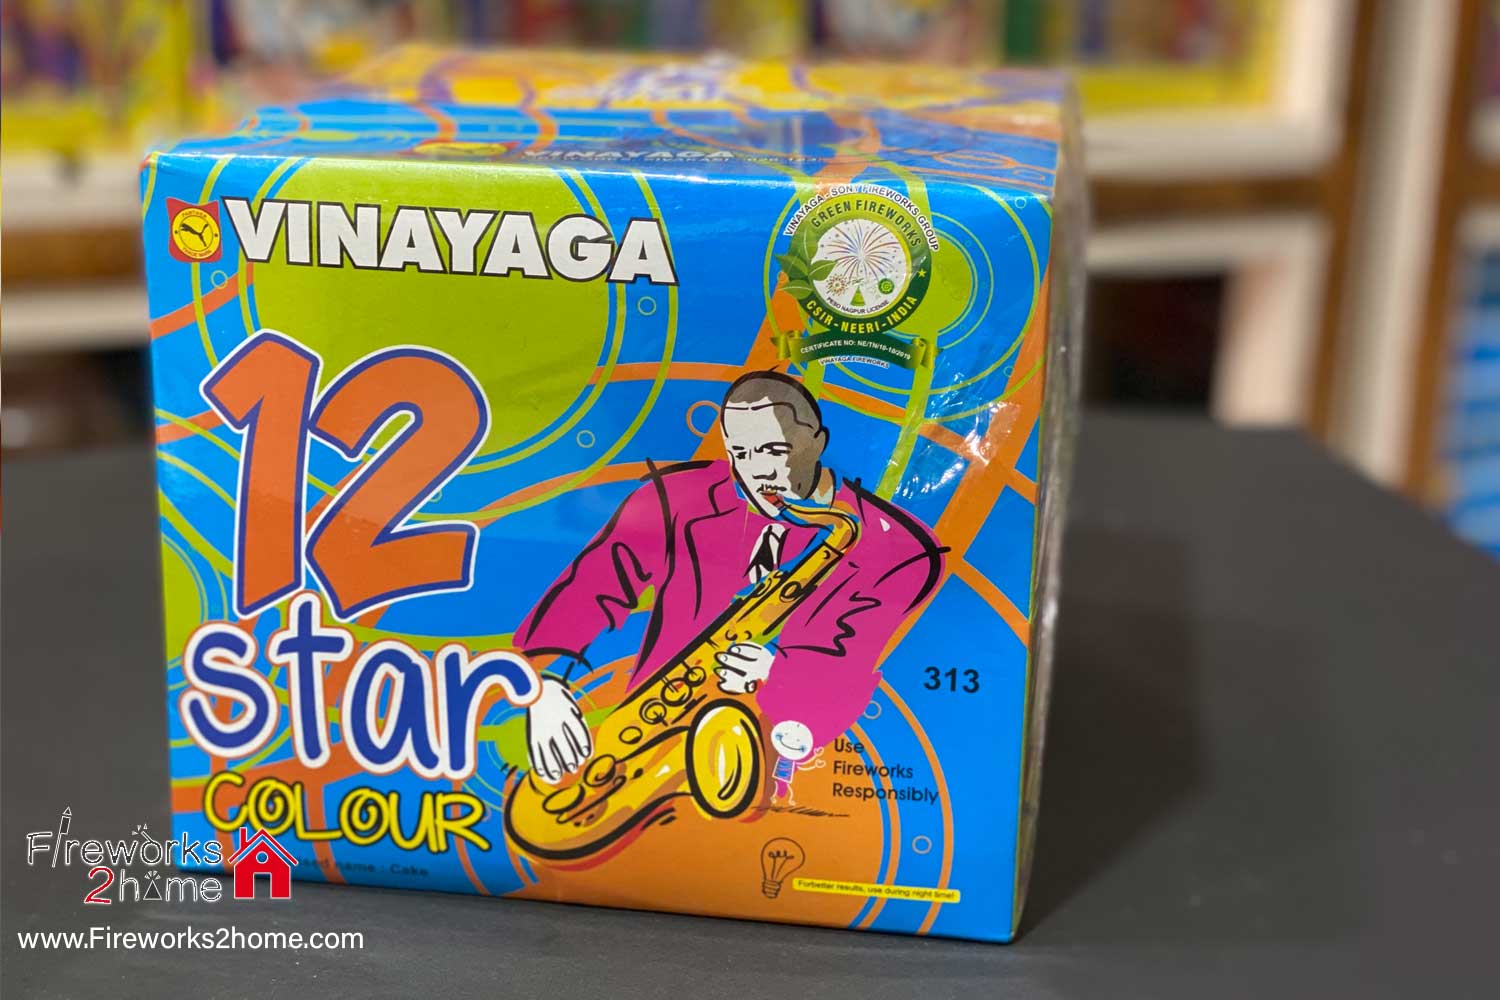 12-star-colour-vinayaga